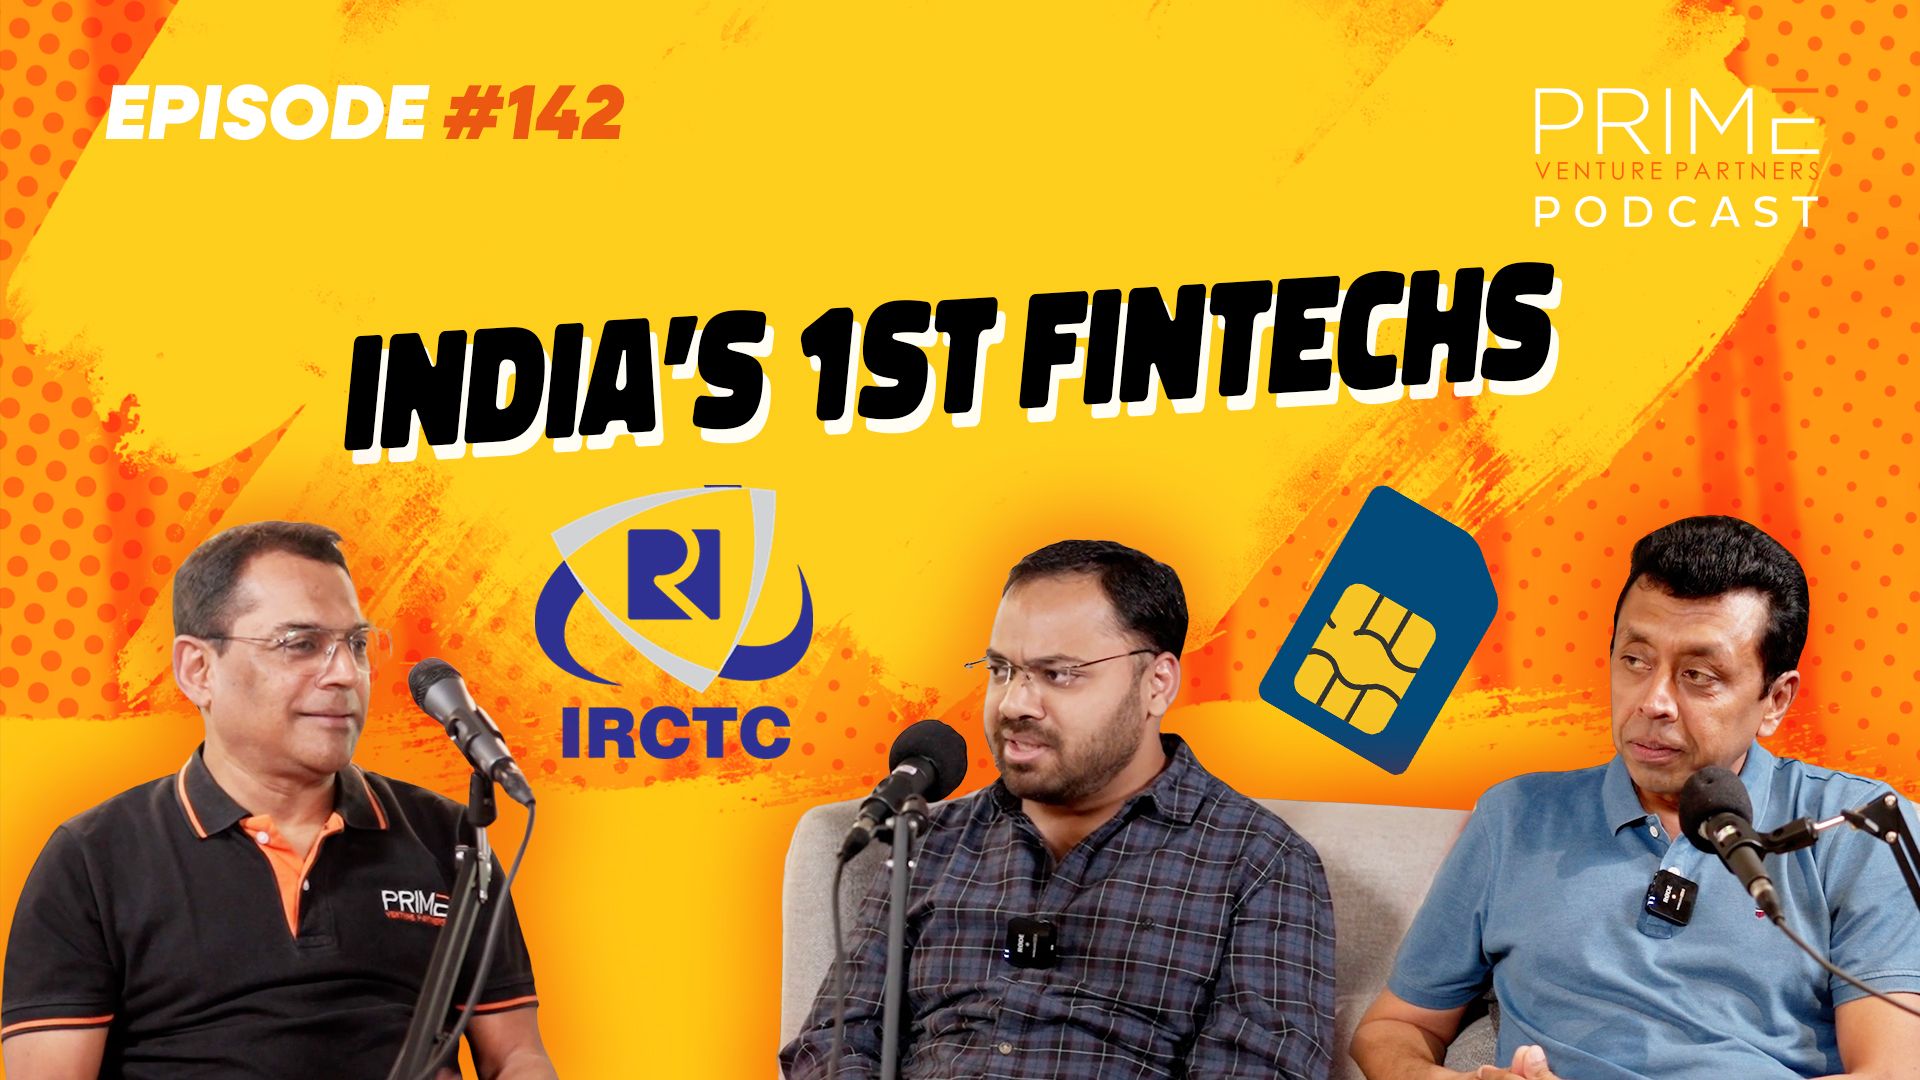 India Fintech 1.0 - Pre Aadhaar and Smartphones with Sanjay Swamy, Srikanth Rajagopalan, and Anshul Rai